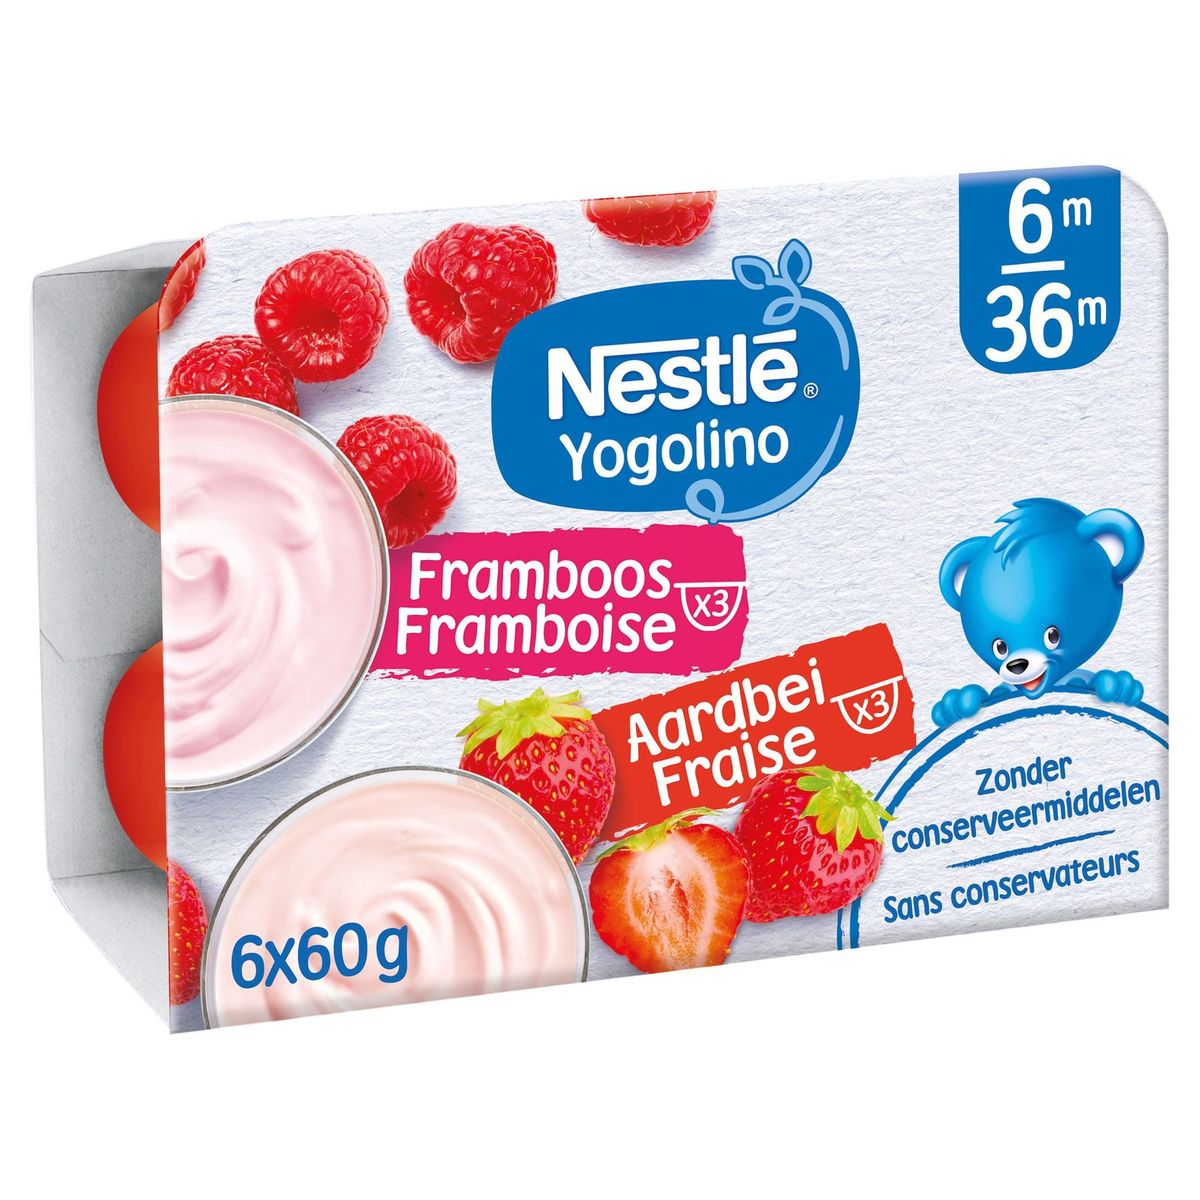 Nestlé Yogolino Laitage Framboise Fraise dès 6 mois 6x60g